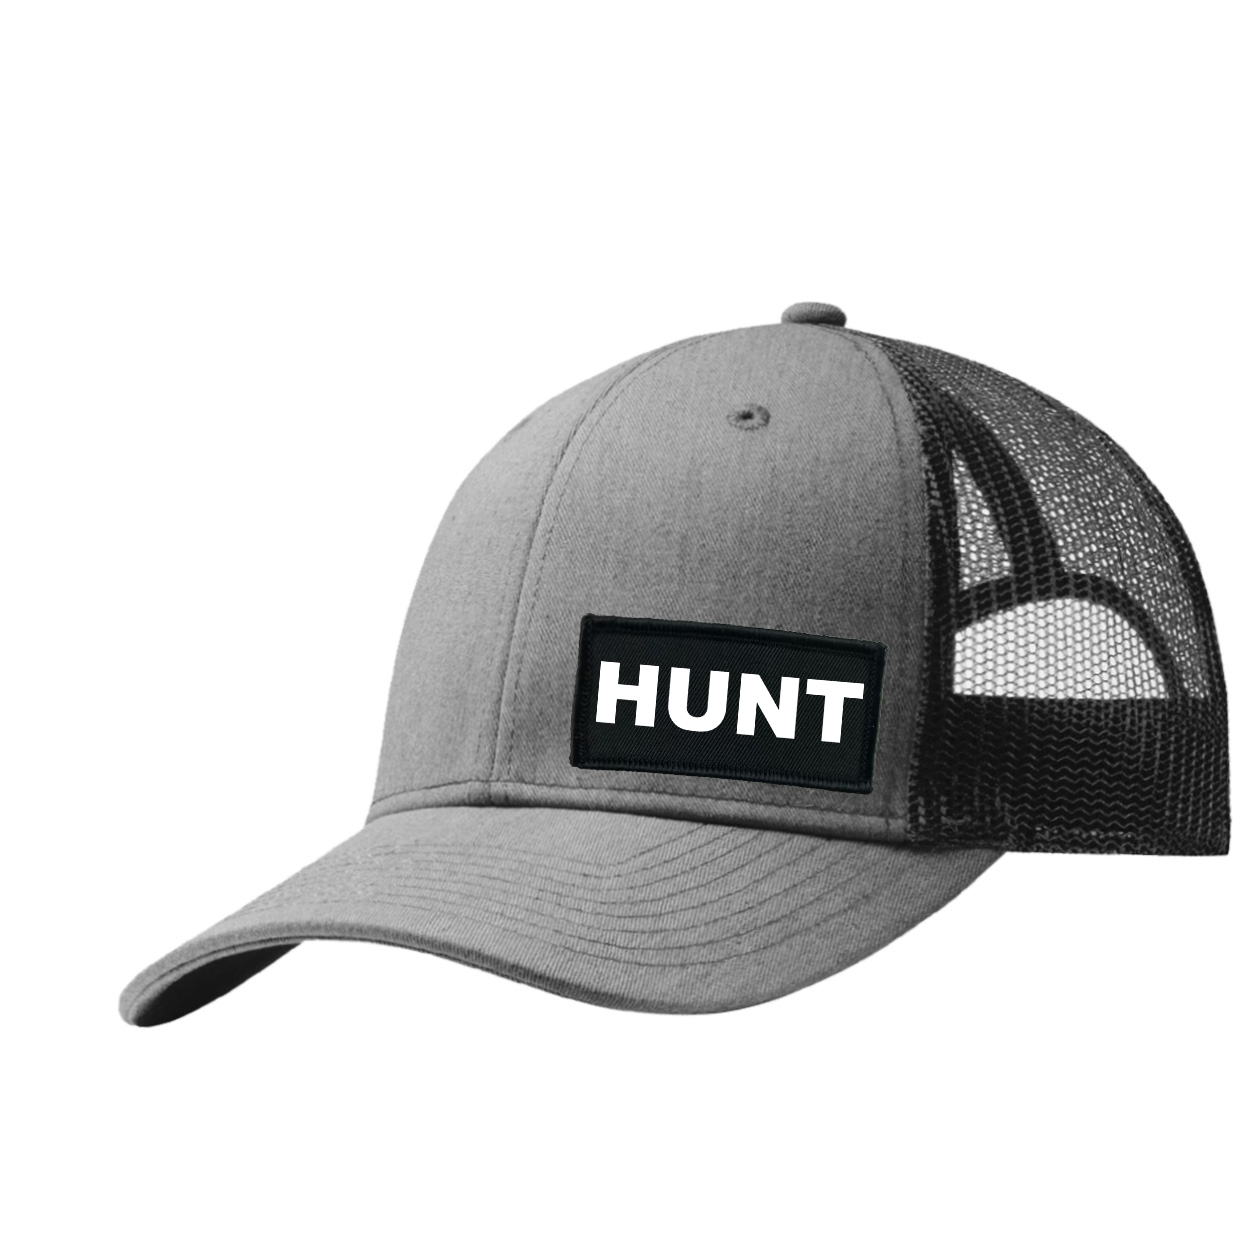 Hunt Brand Logo Night Out Woven Patch Snapback Trucker Hat Heather Gray/Black (White Logo)